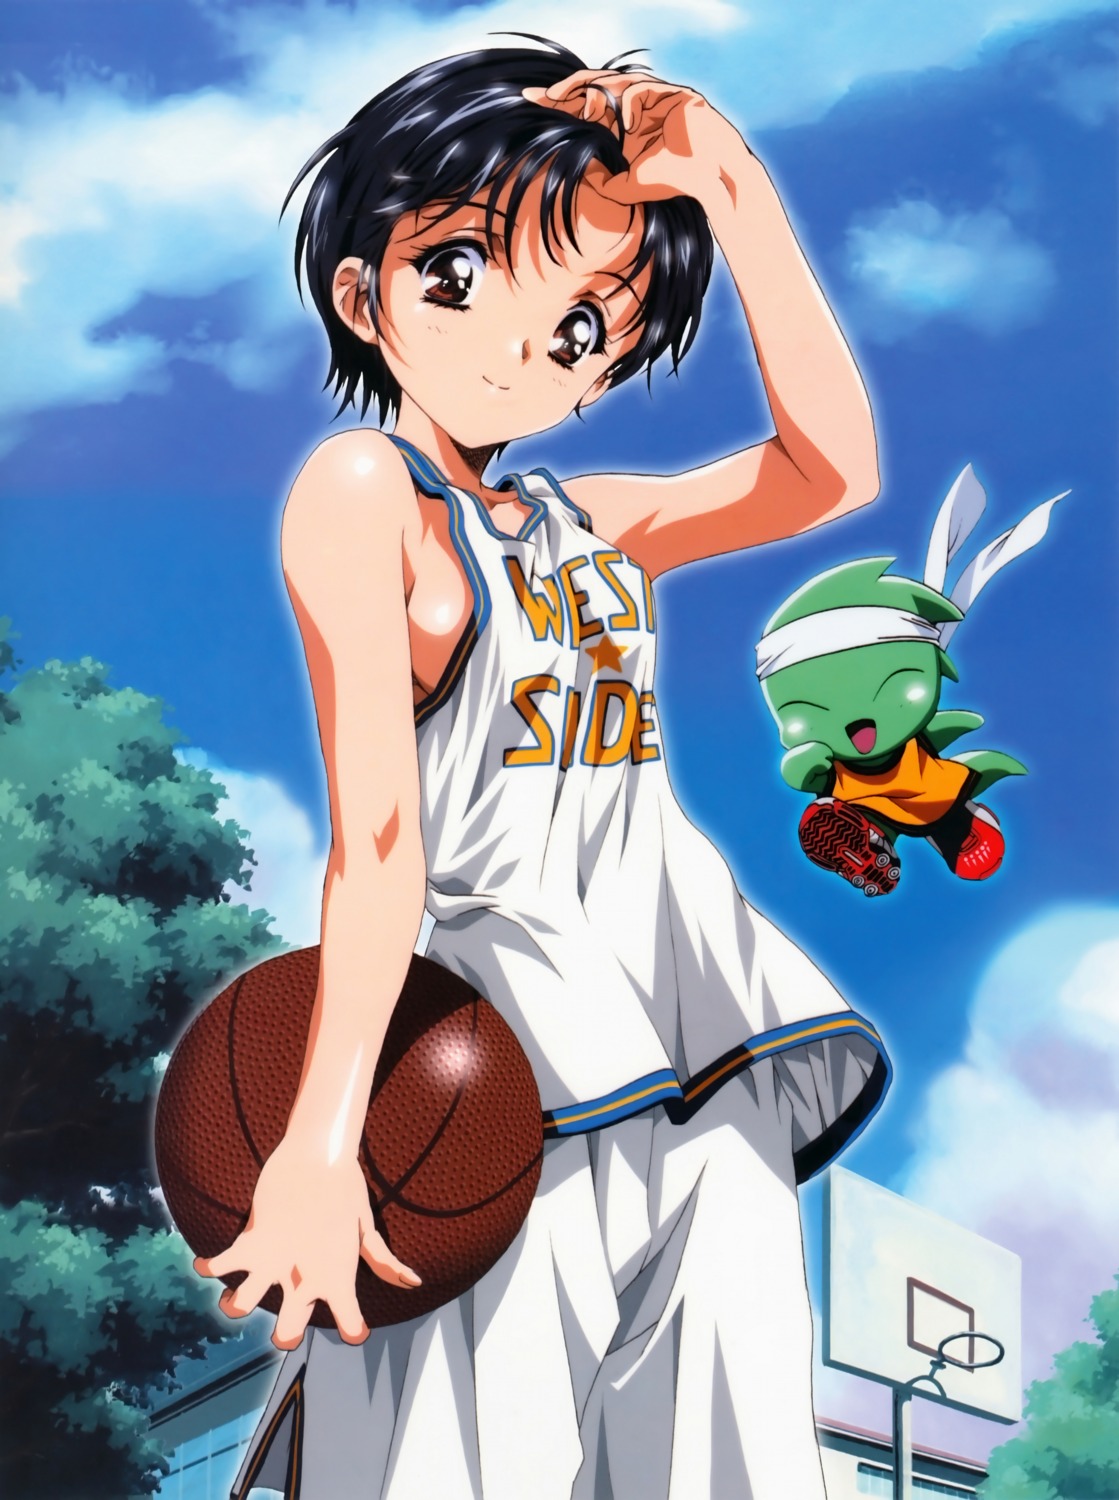 basketball kawarajima_koh no_bra